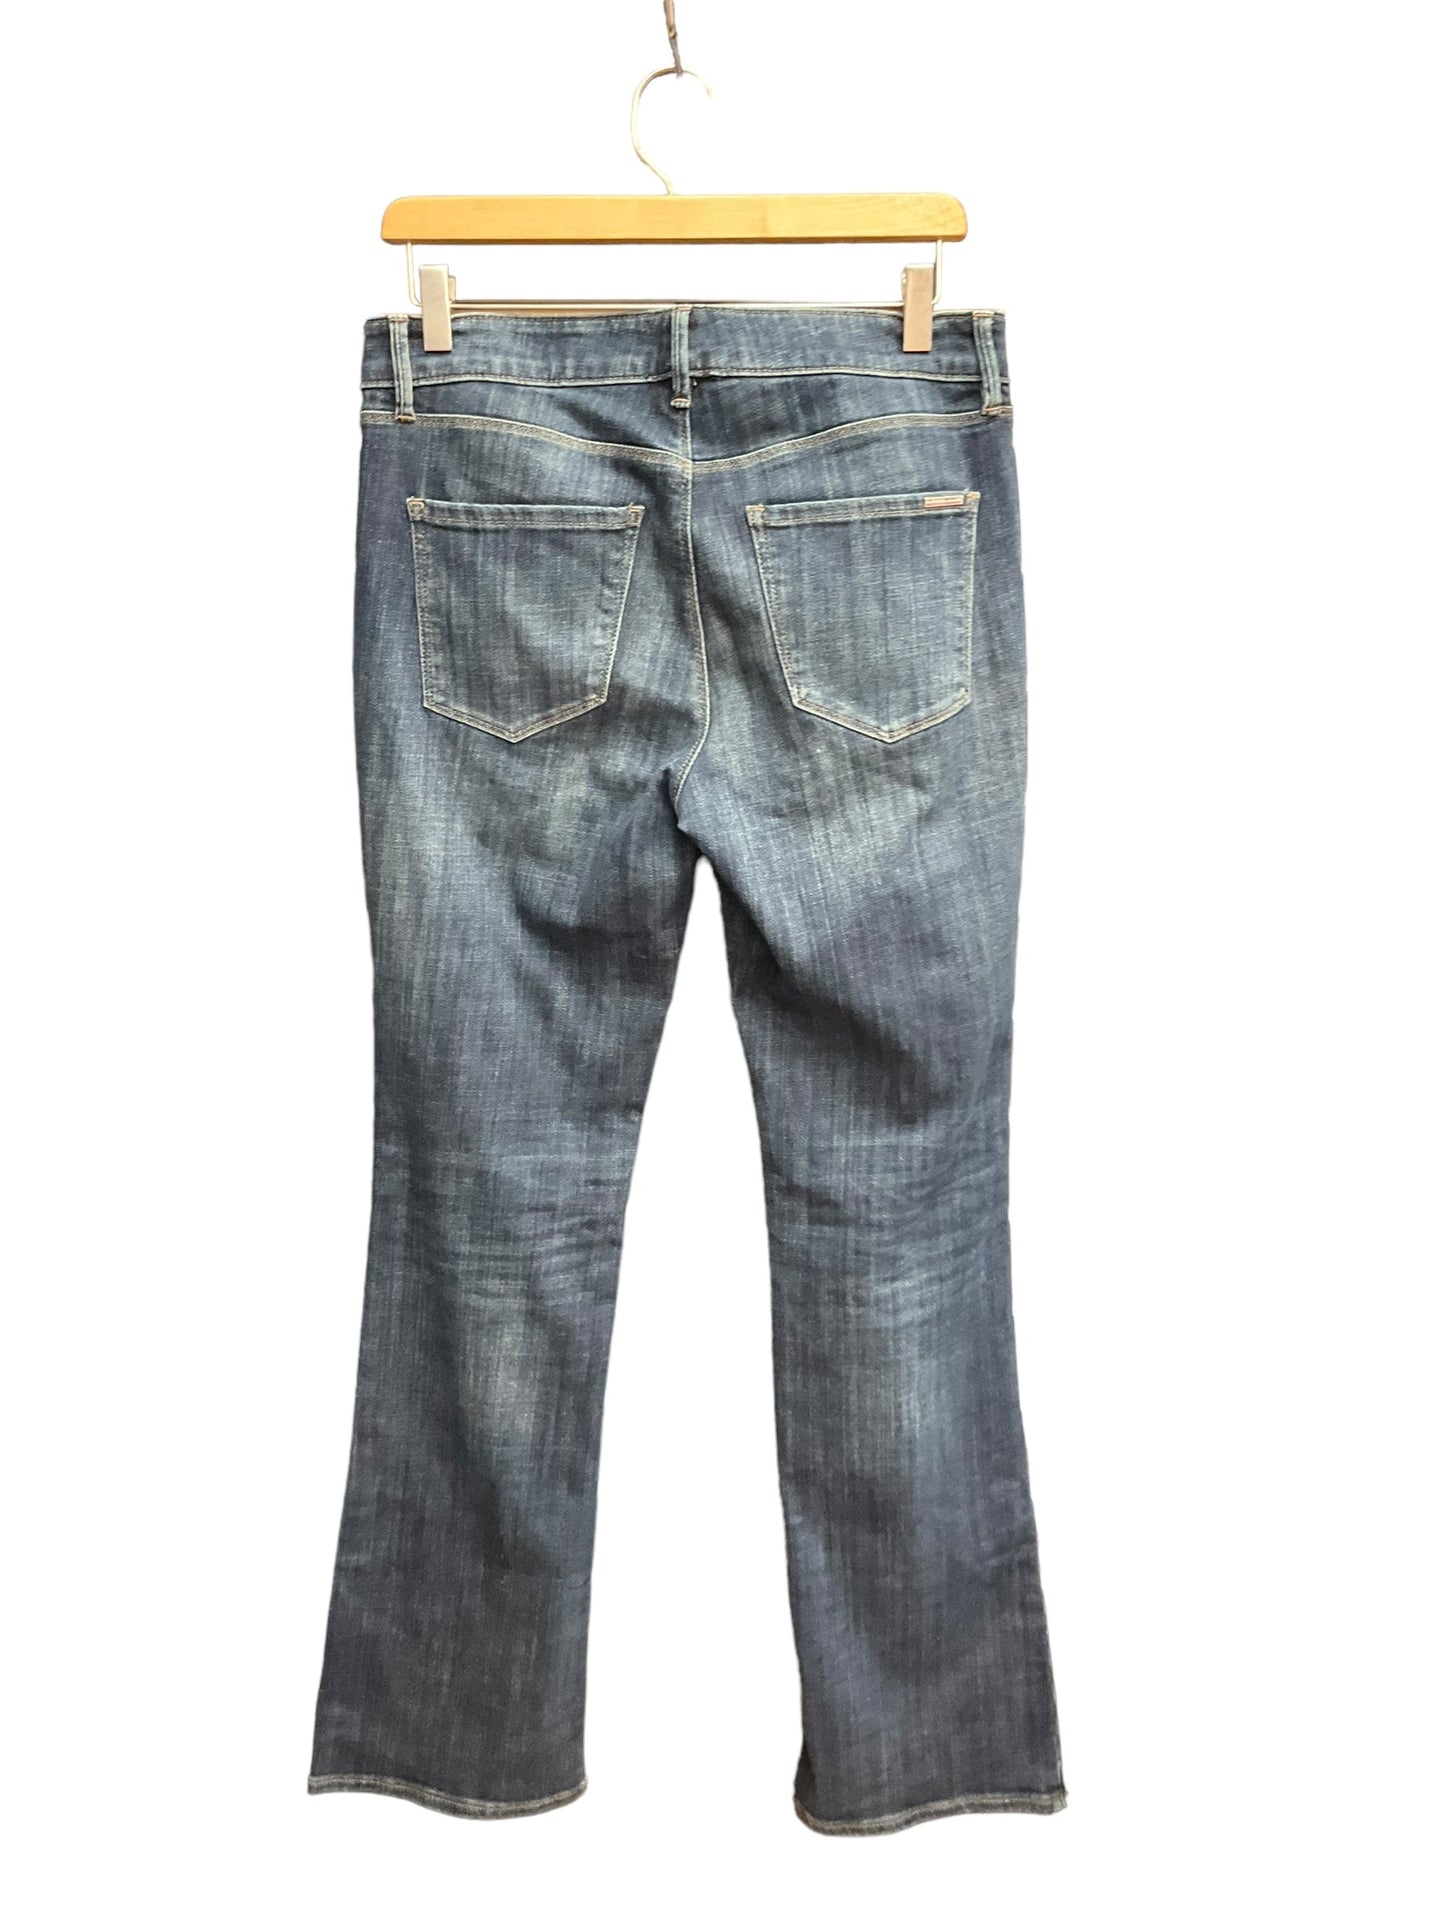 Blue Denim Jeans Flared White House Black Market, Size 8